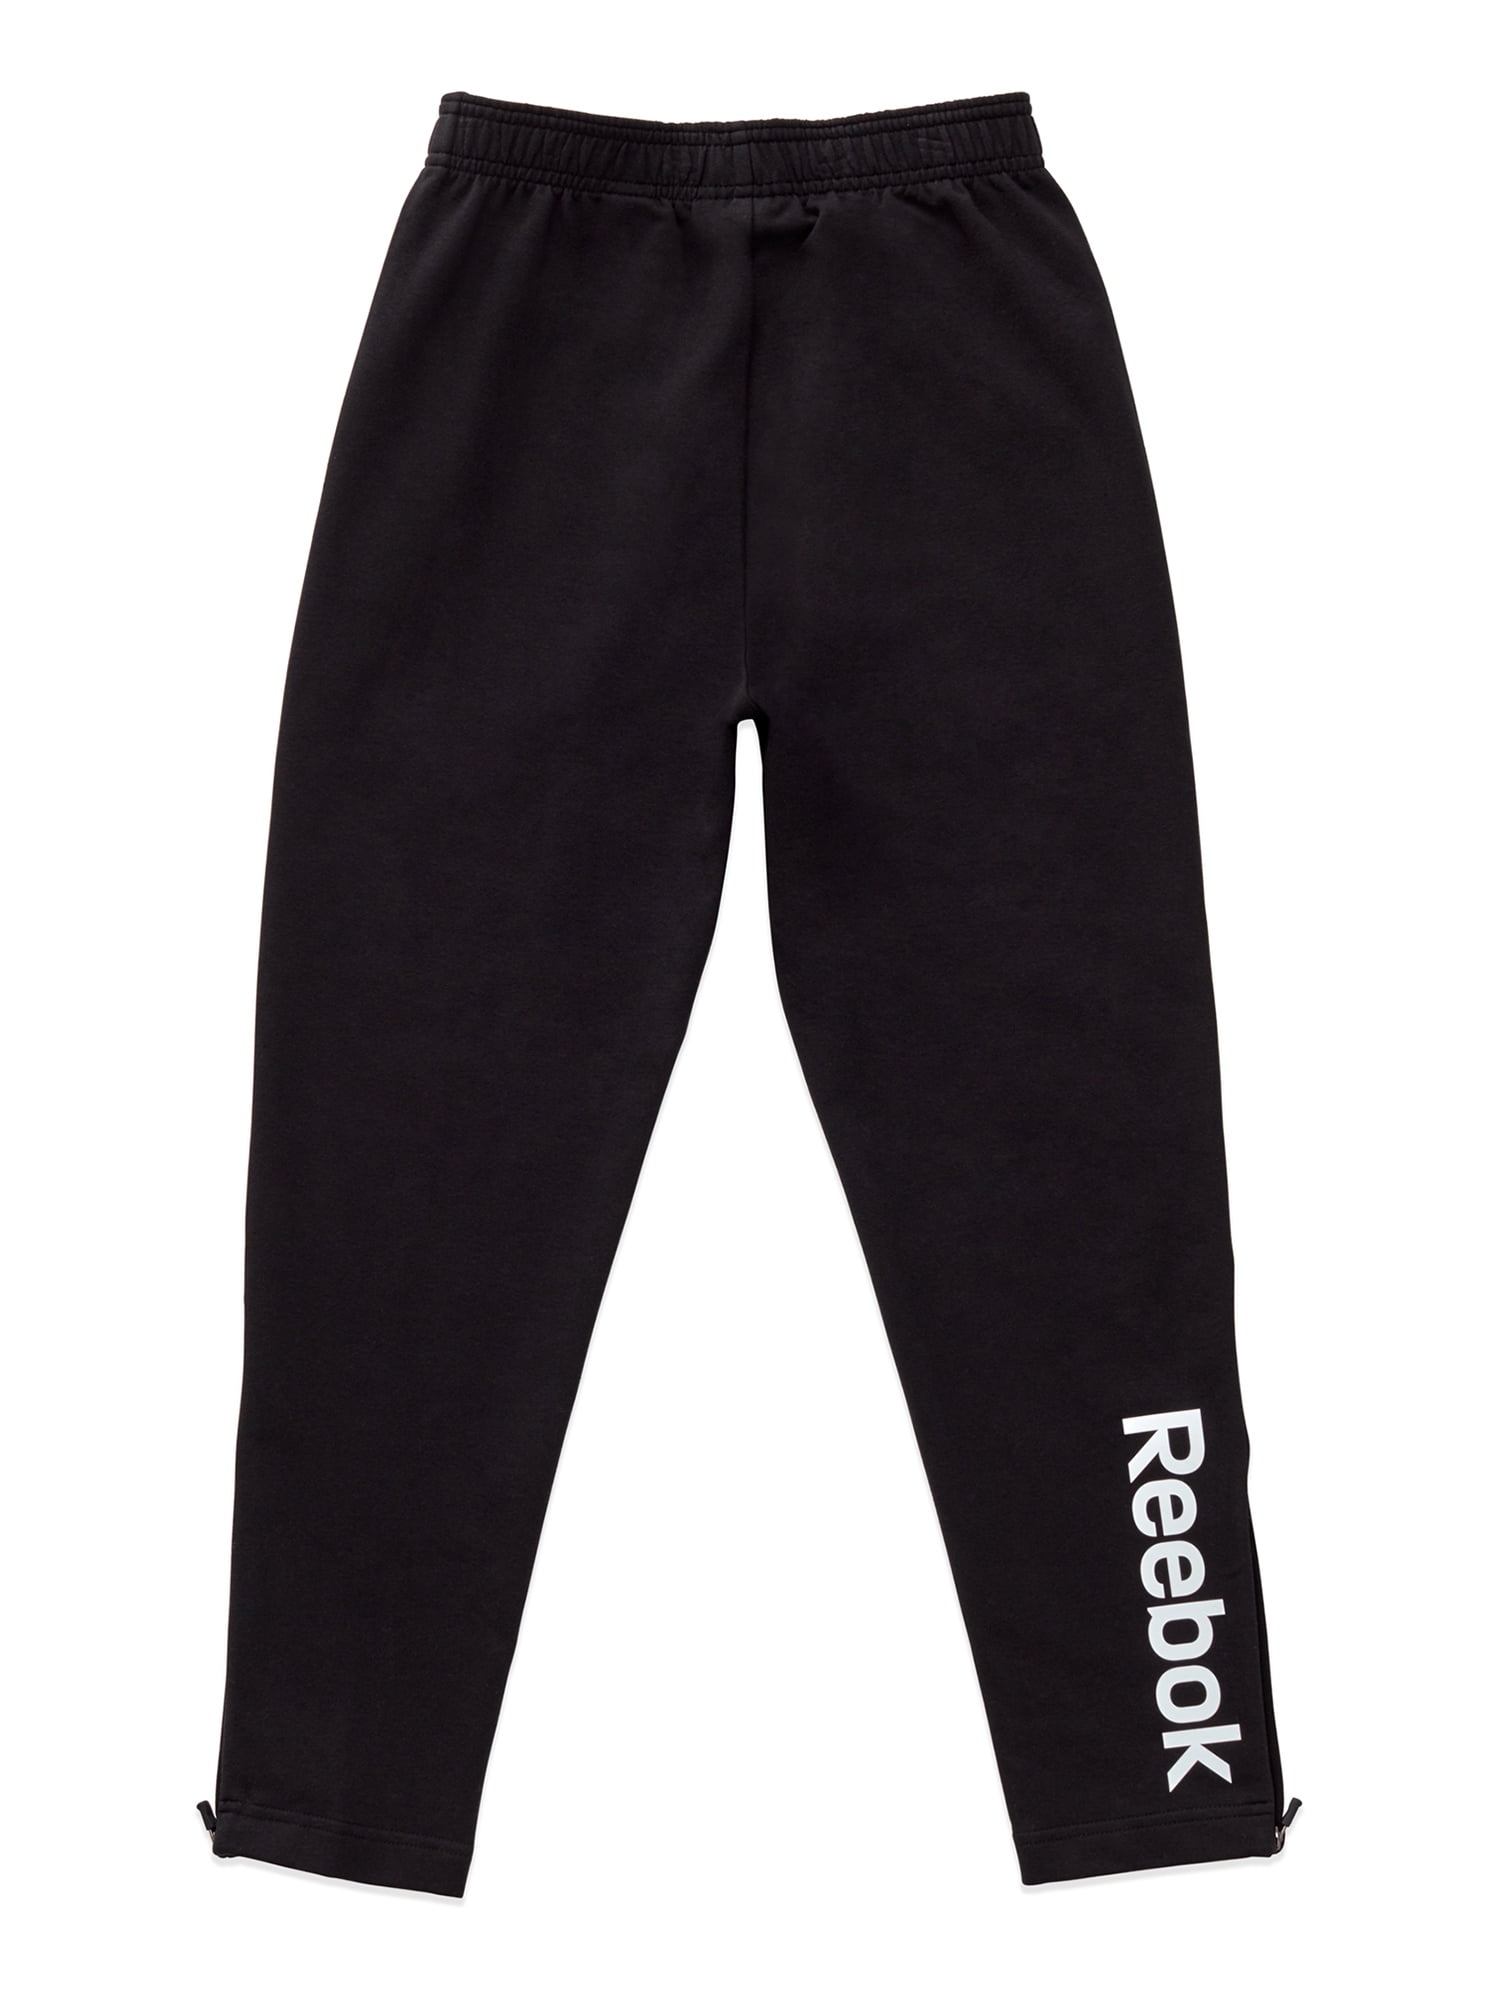 Buy on the official website Global fashion Reebok Boys Pants Pants Shop ...